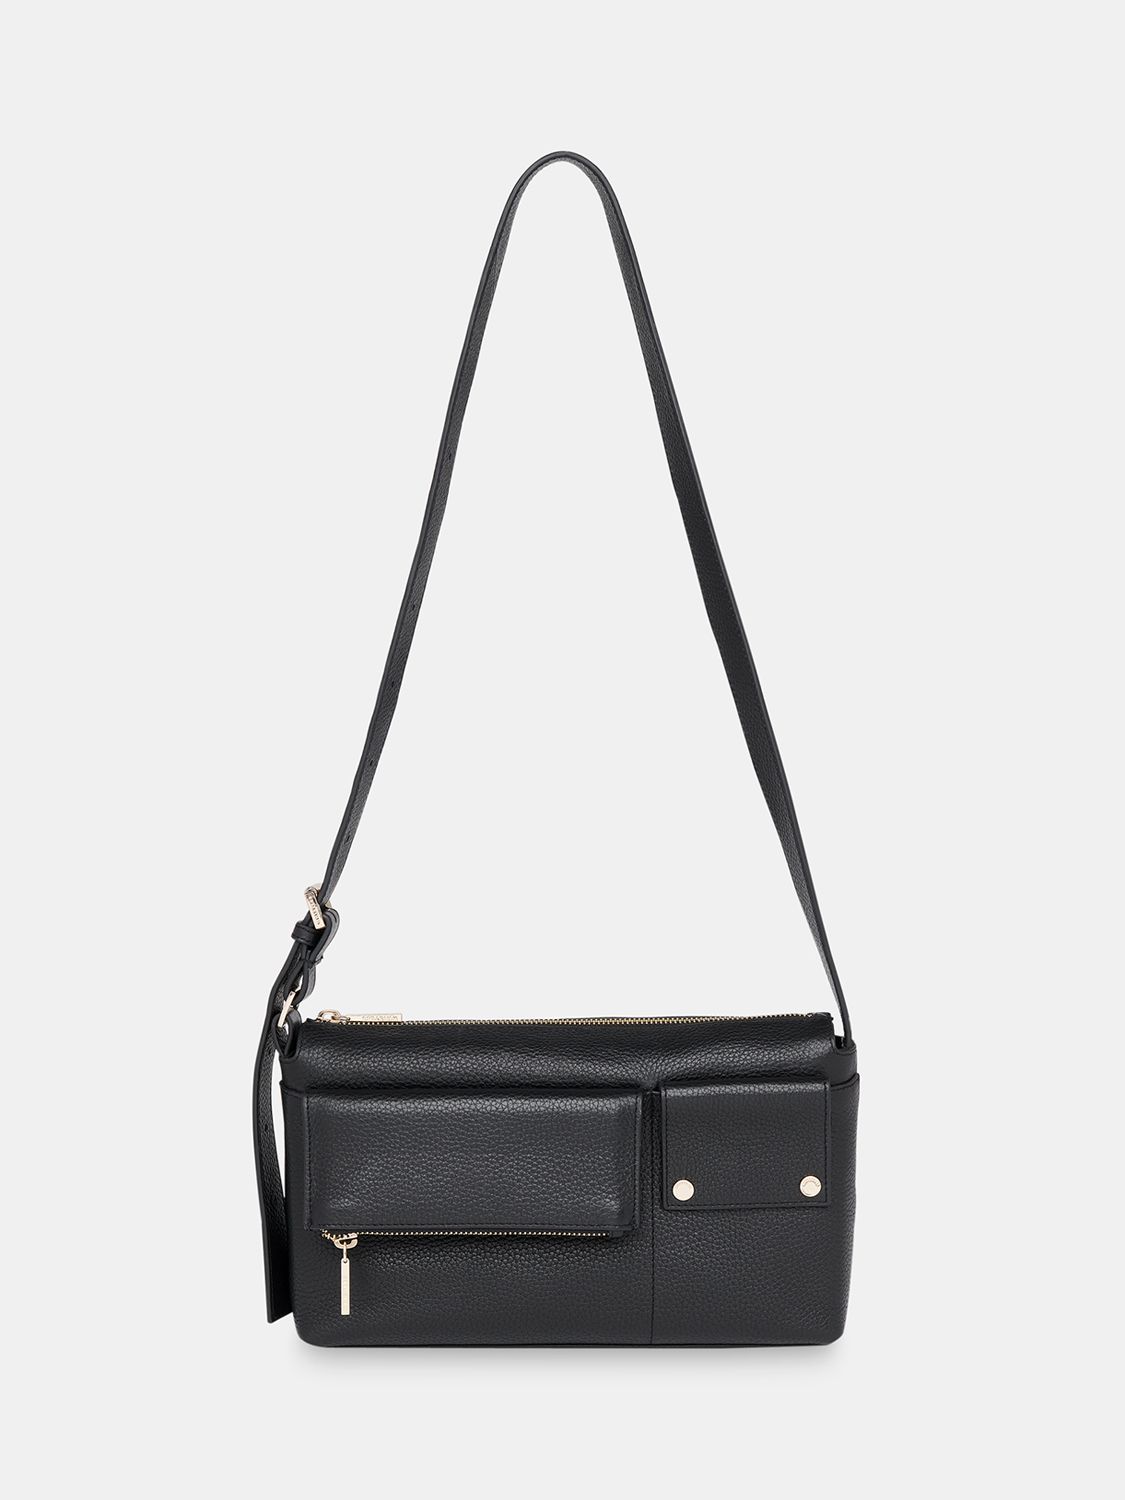 Whistles Tilda Pocket Detail Handbag, Black, One Size